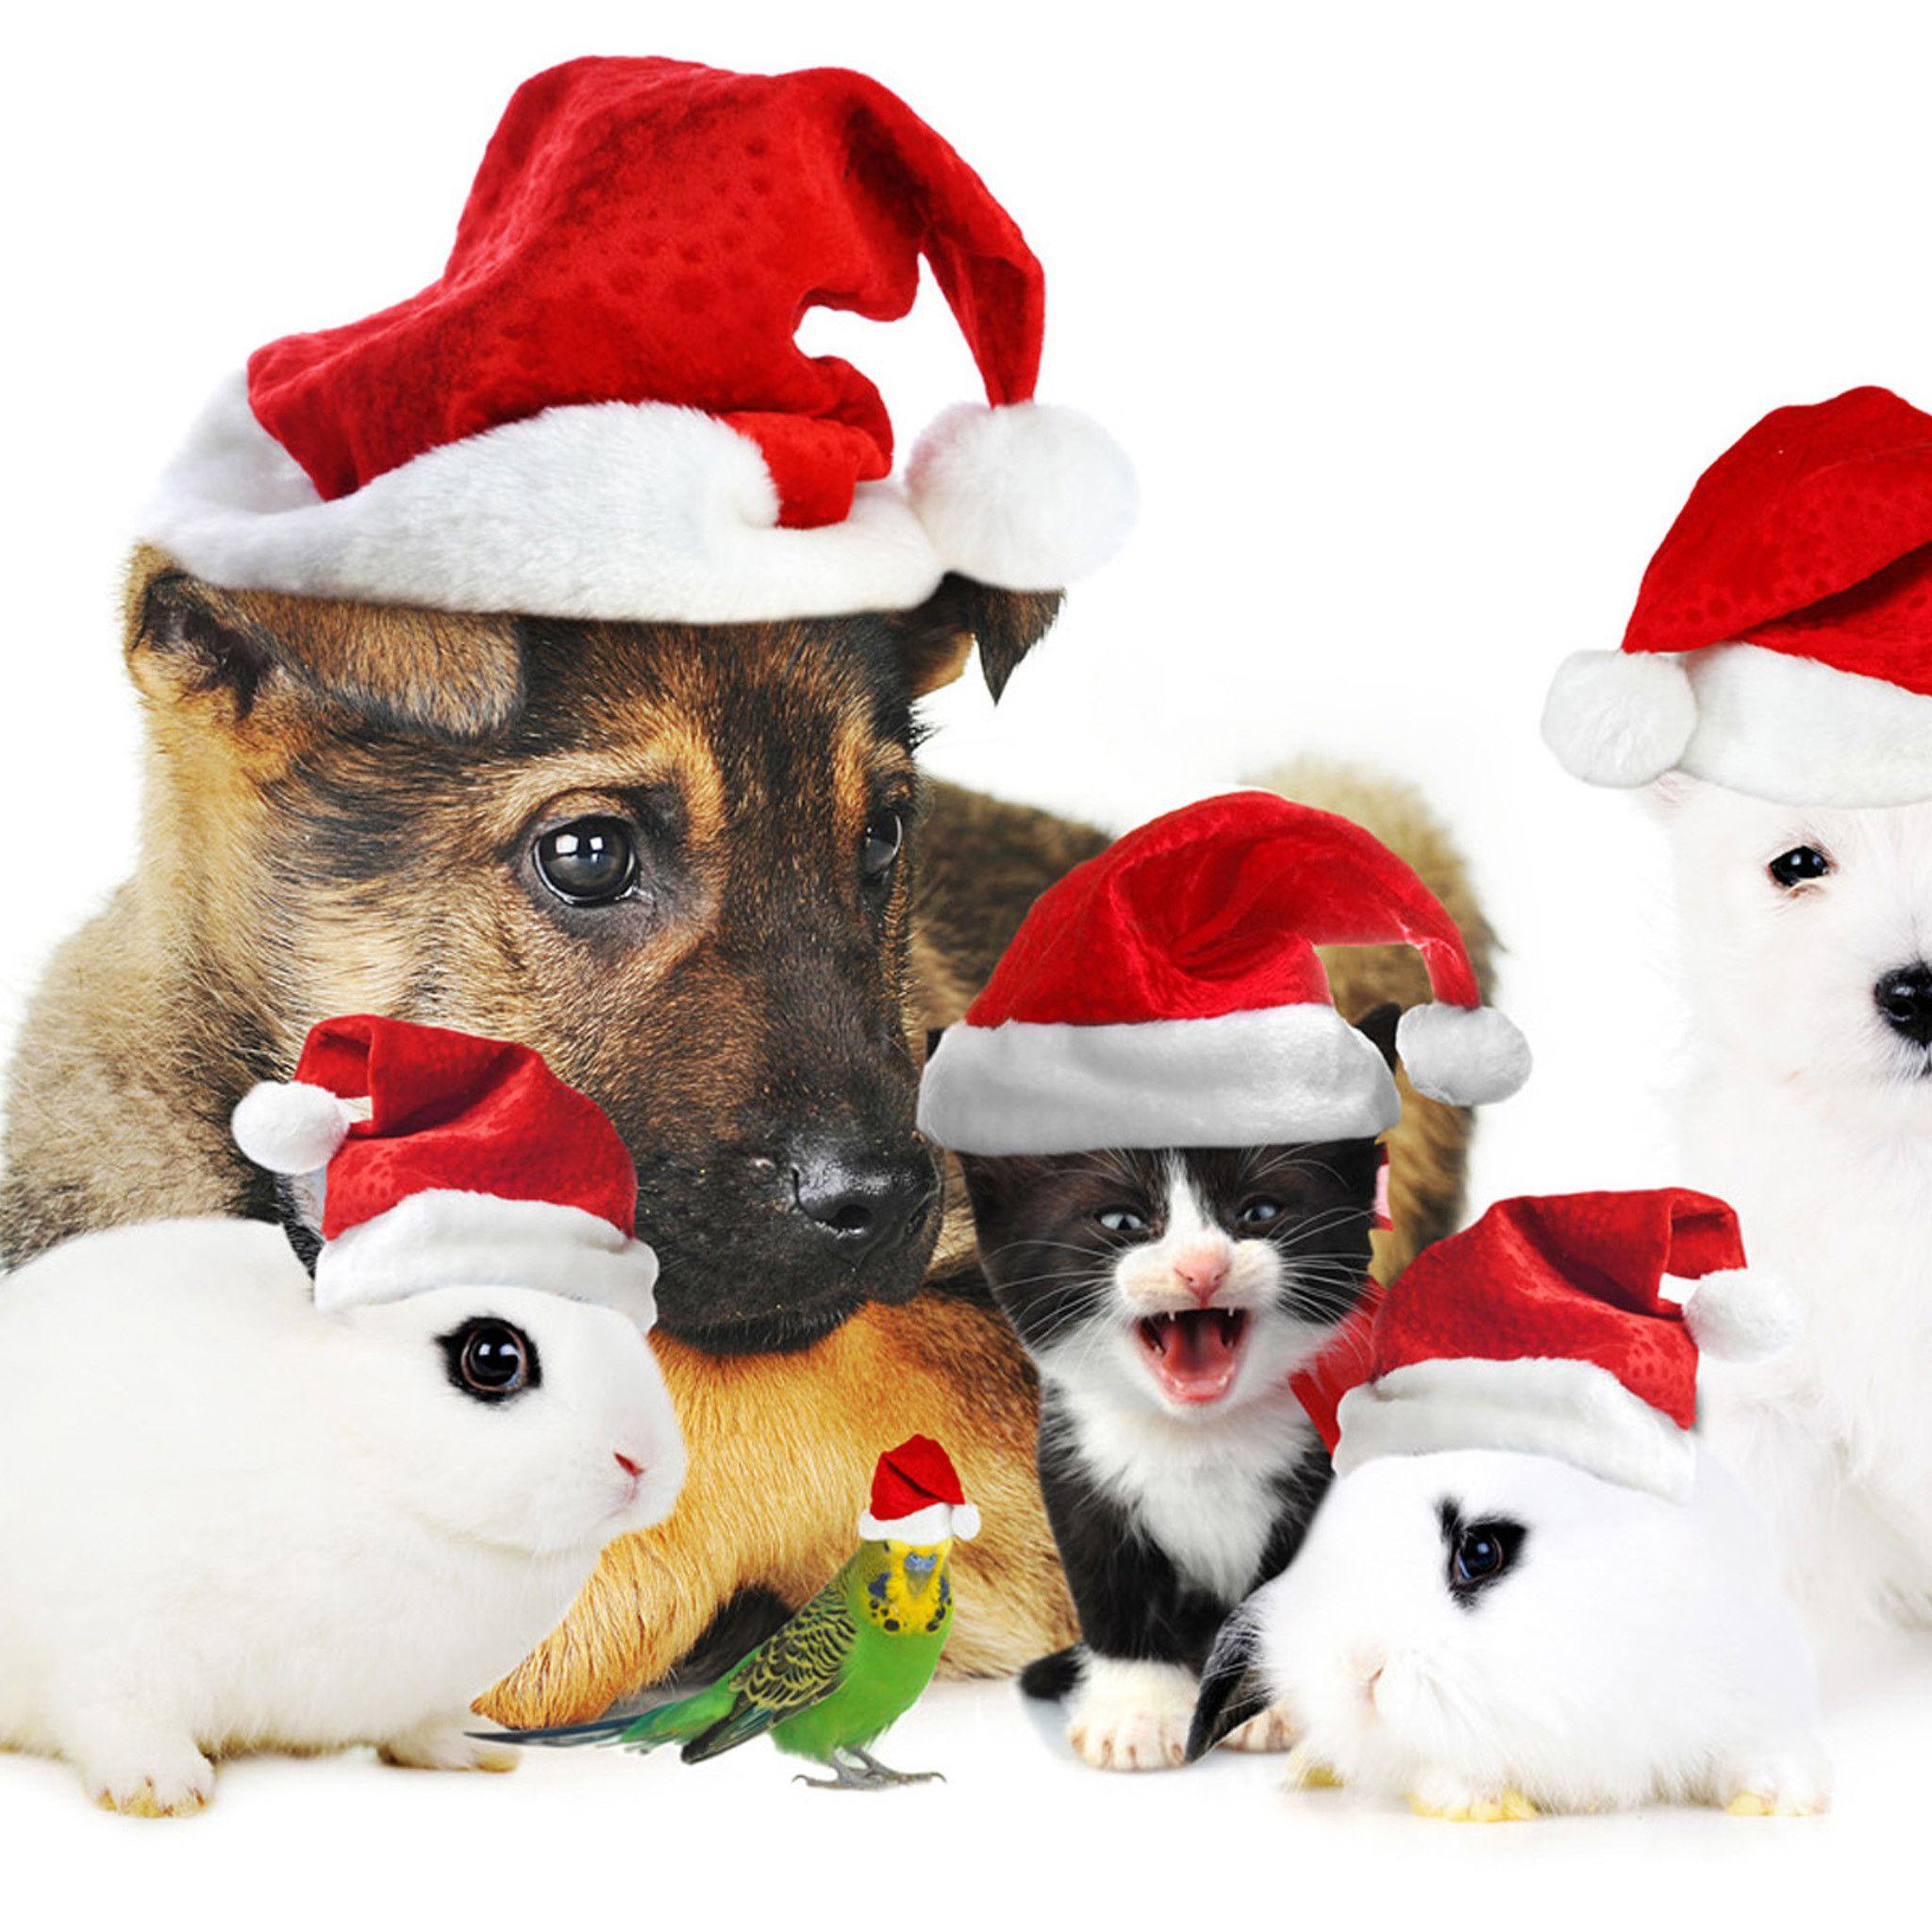 Cute Animal Christmas Wallpapers - Top Free Cute Animal Christmas